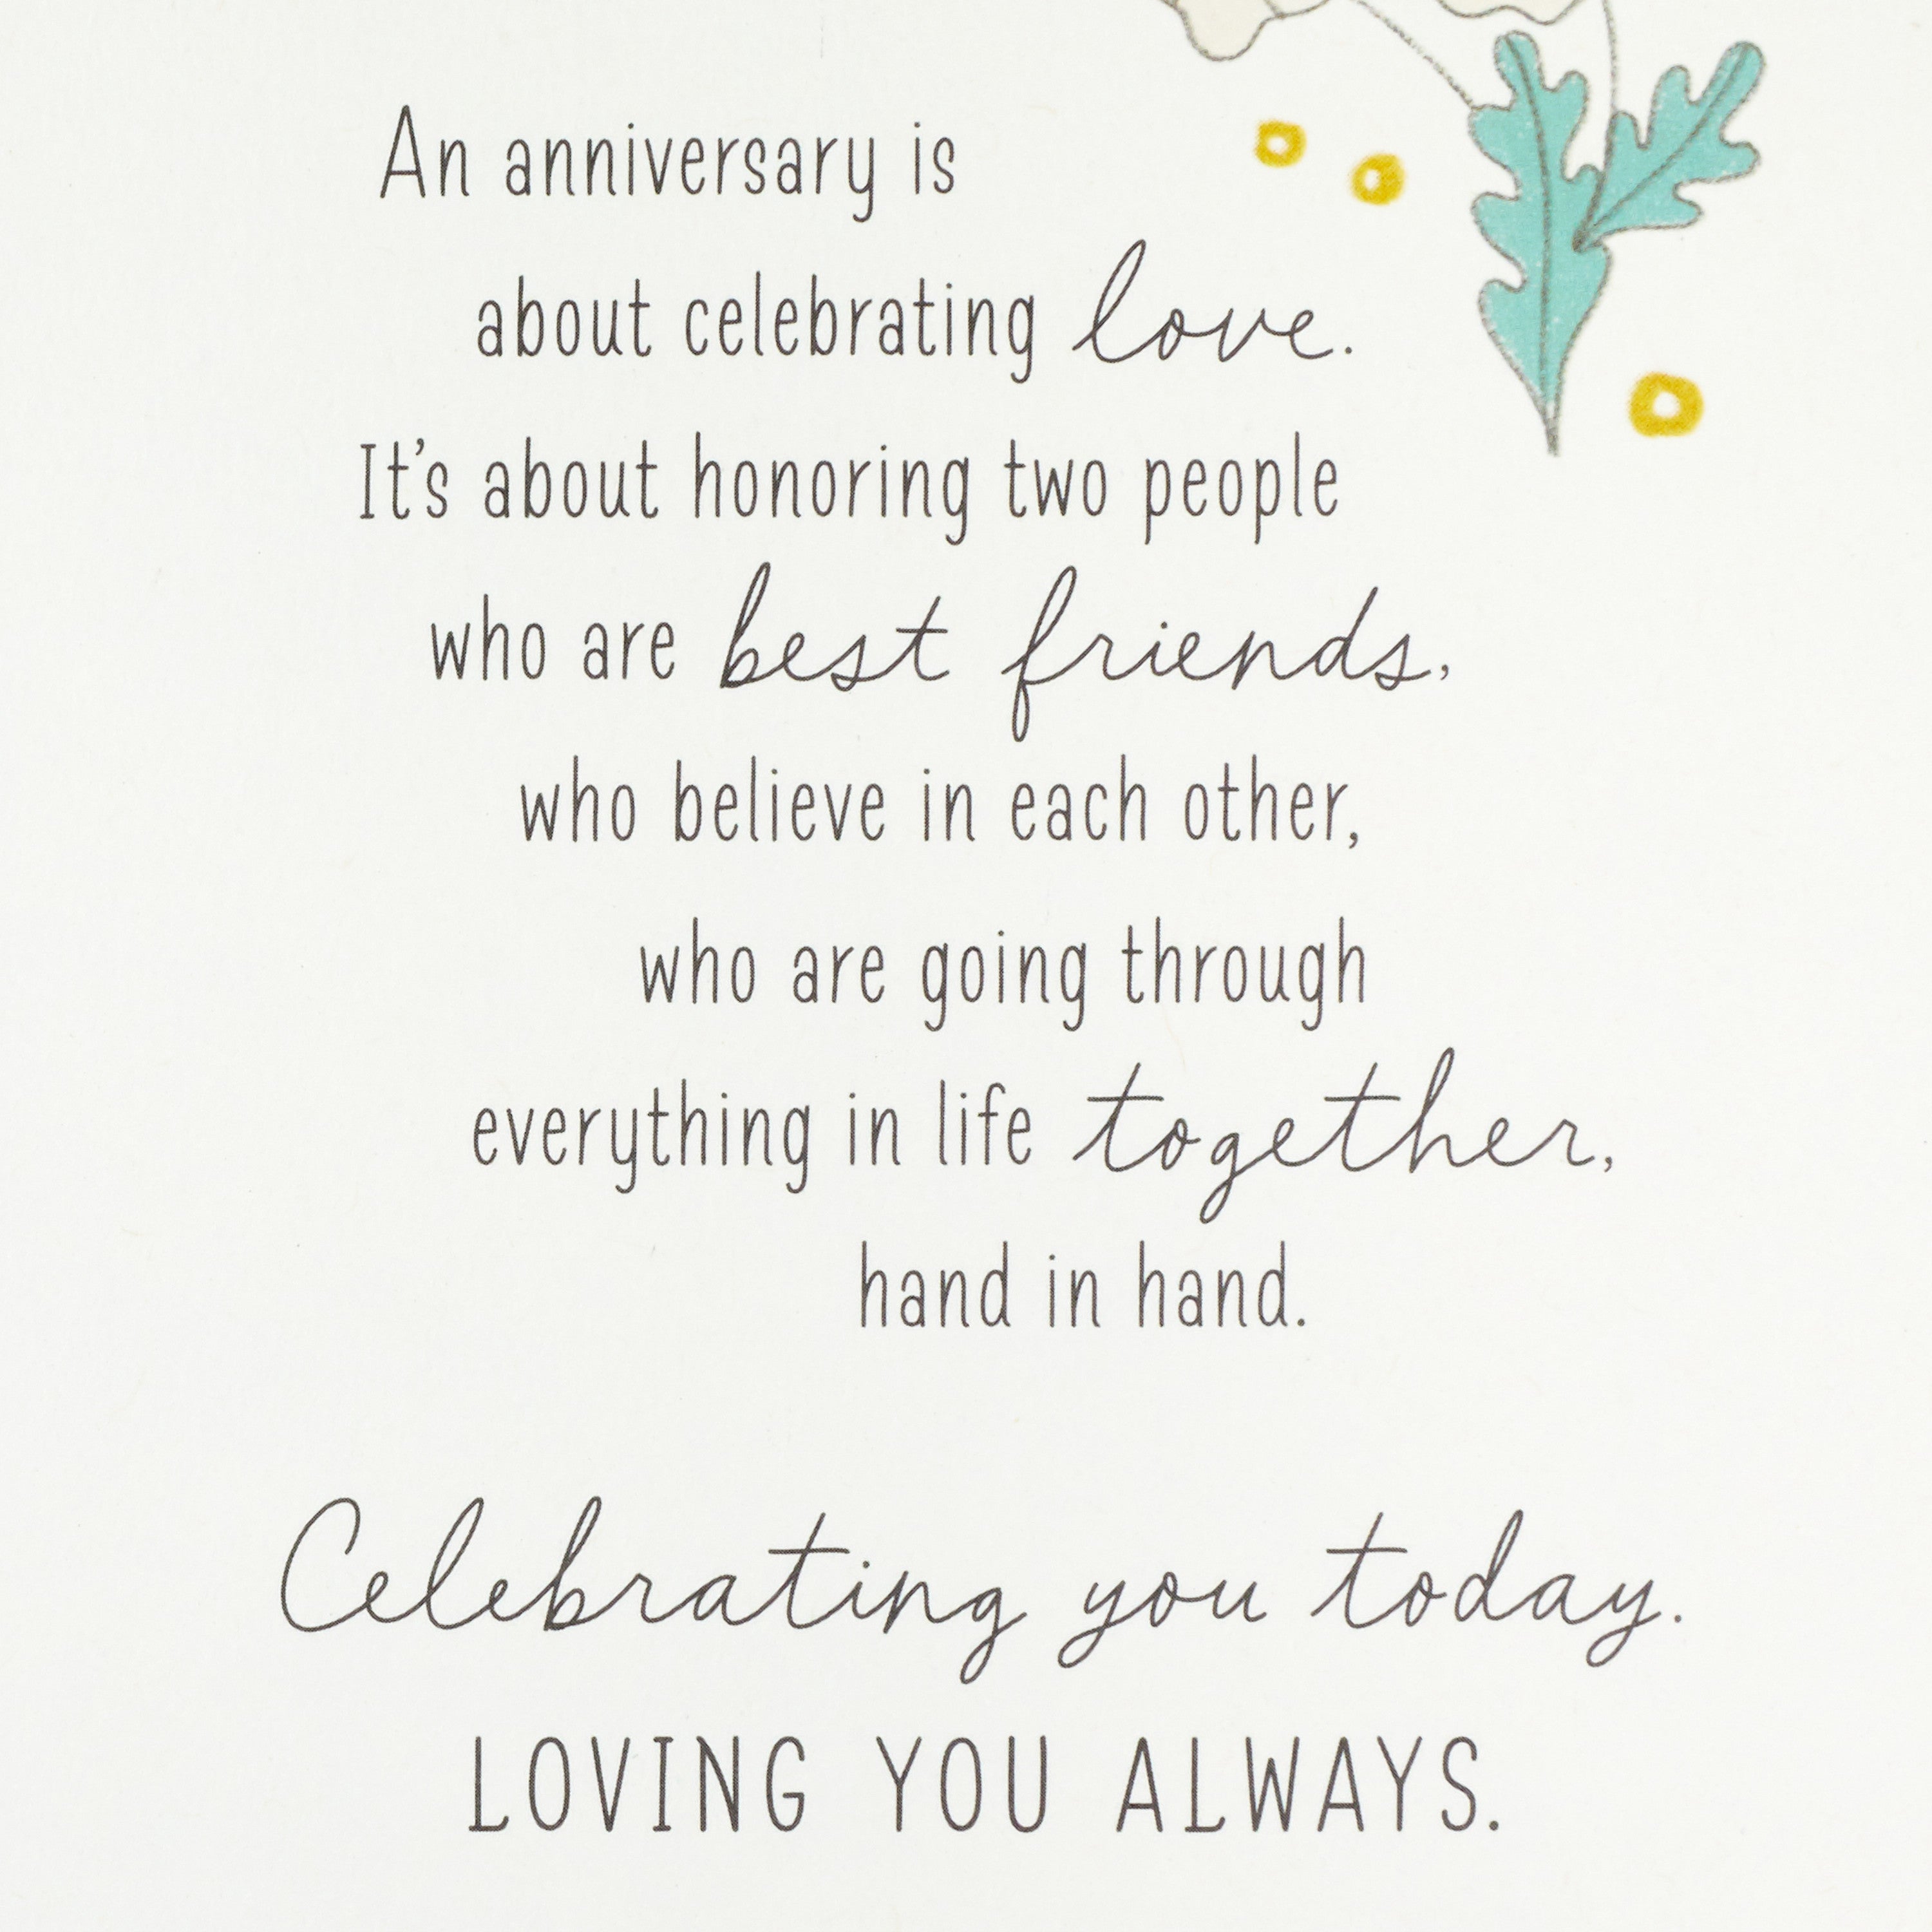 Hallmark Anniversary Card for Couple (So Good Together)